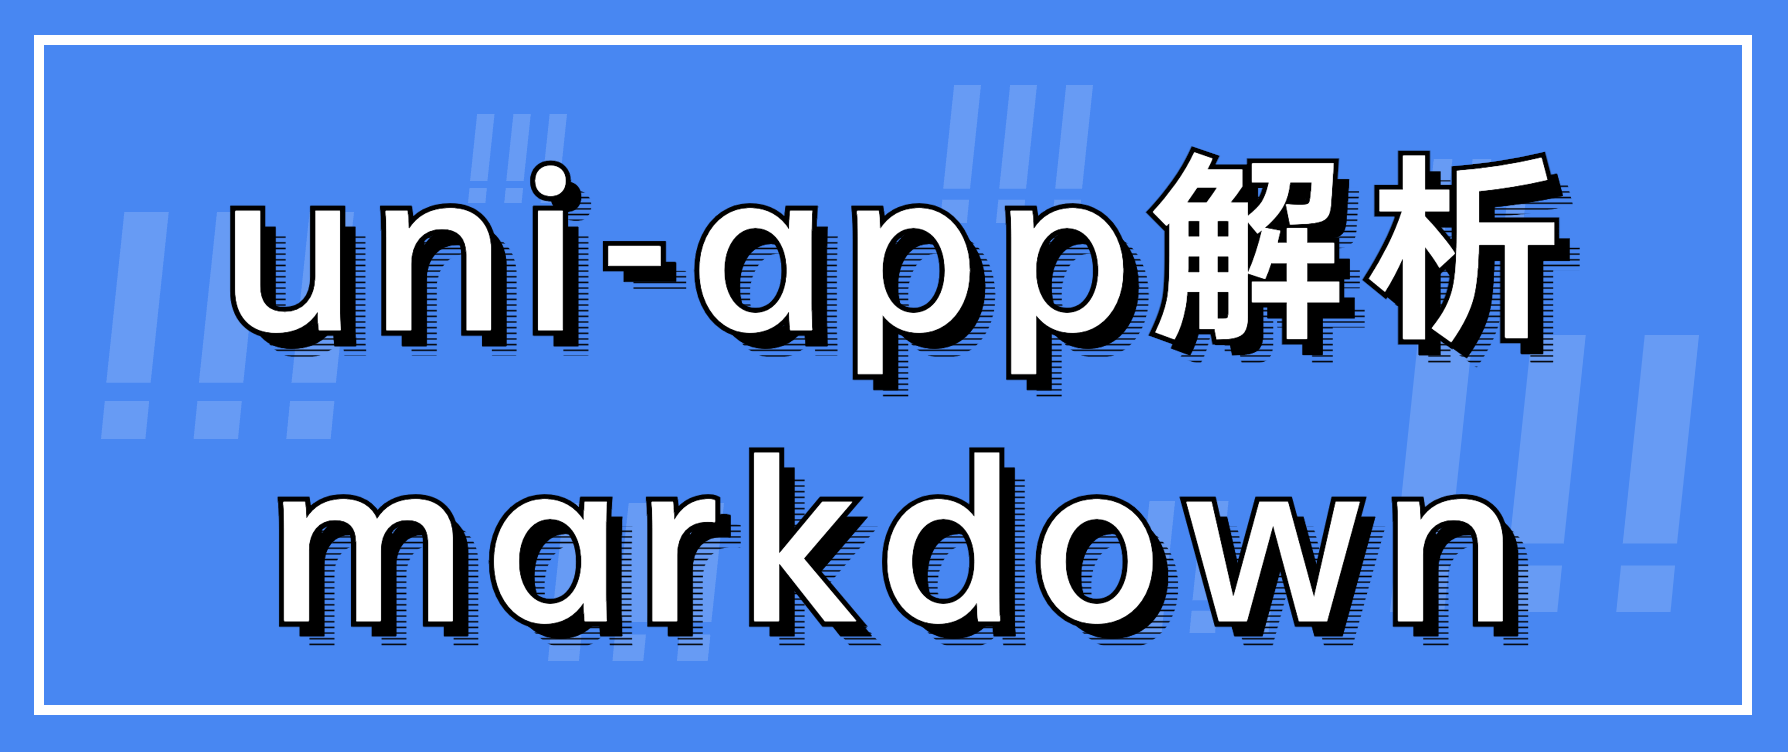 uniapp中解析markdown支持网页和小程序